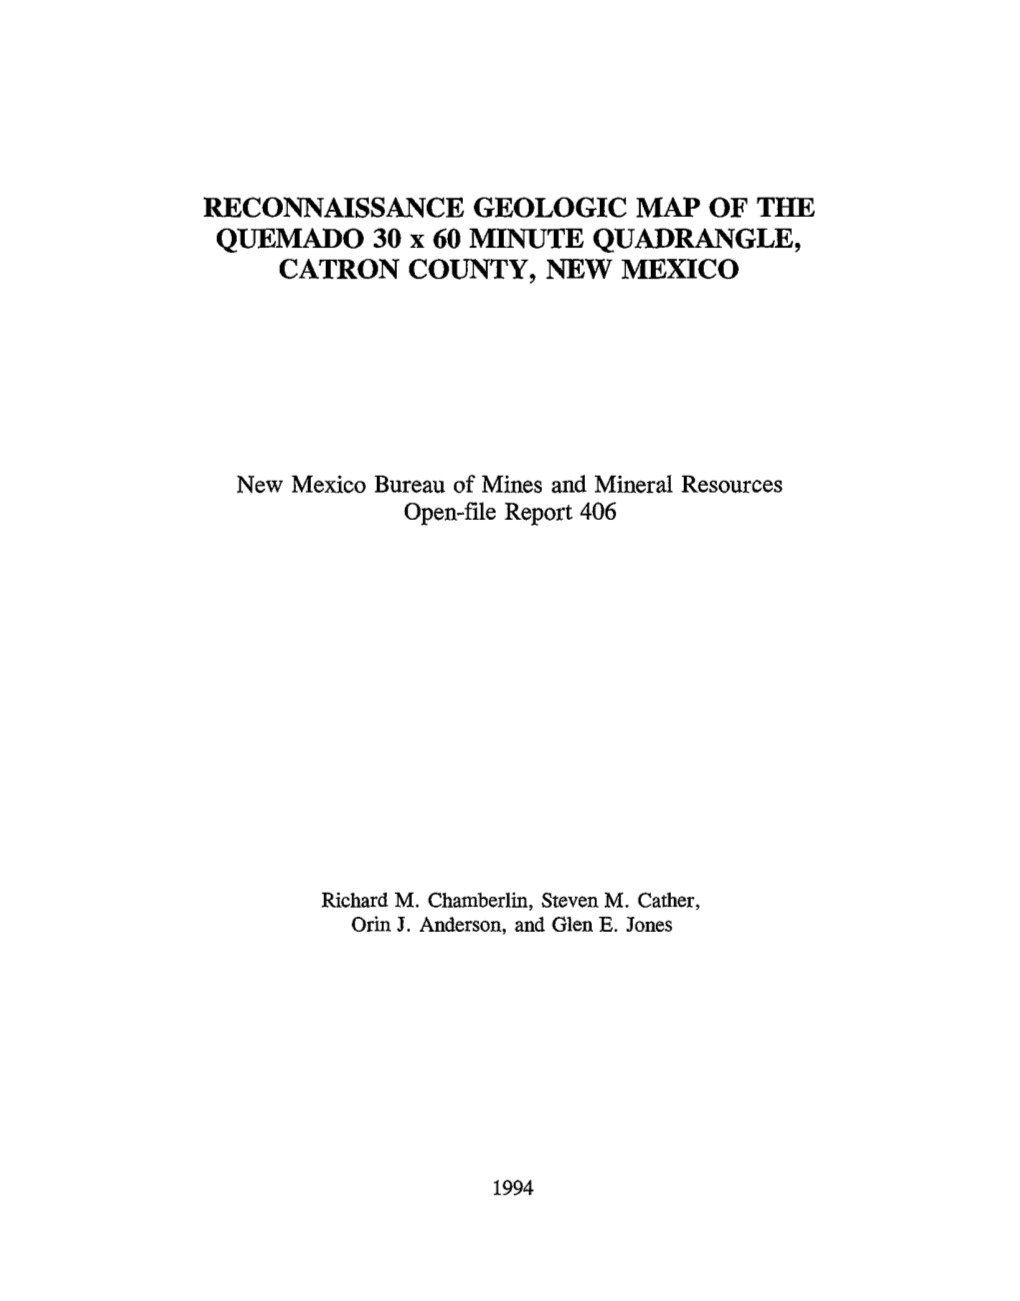 RECONNAISSANCE GEOLOGIC MAP of the QUEMADO 30 X 60 MINUTE QUADRANGLE, CATRON COUNTY, NEW MEXICO